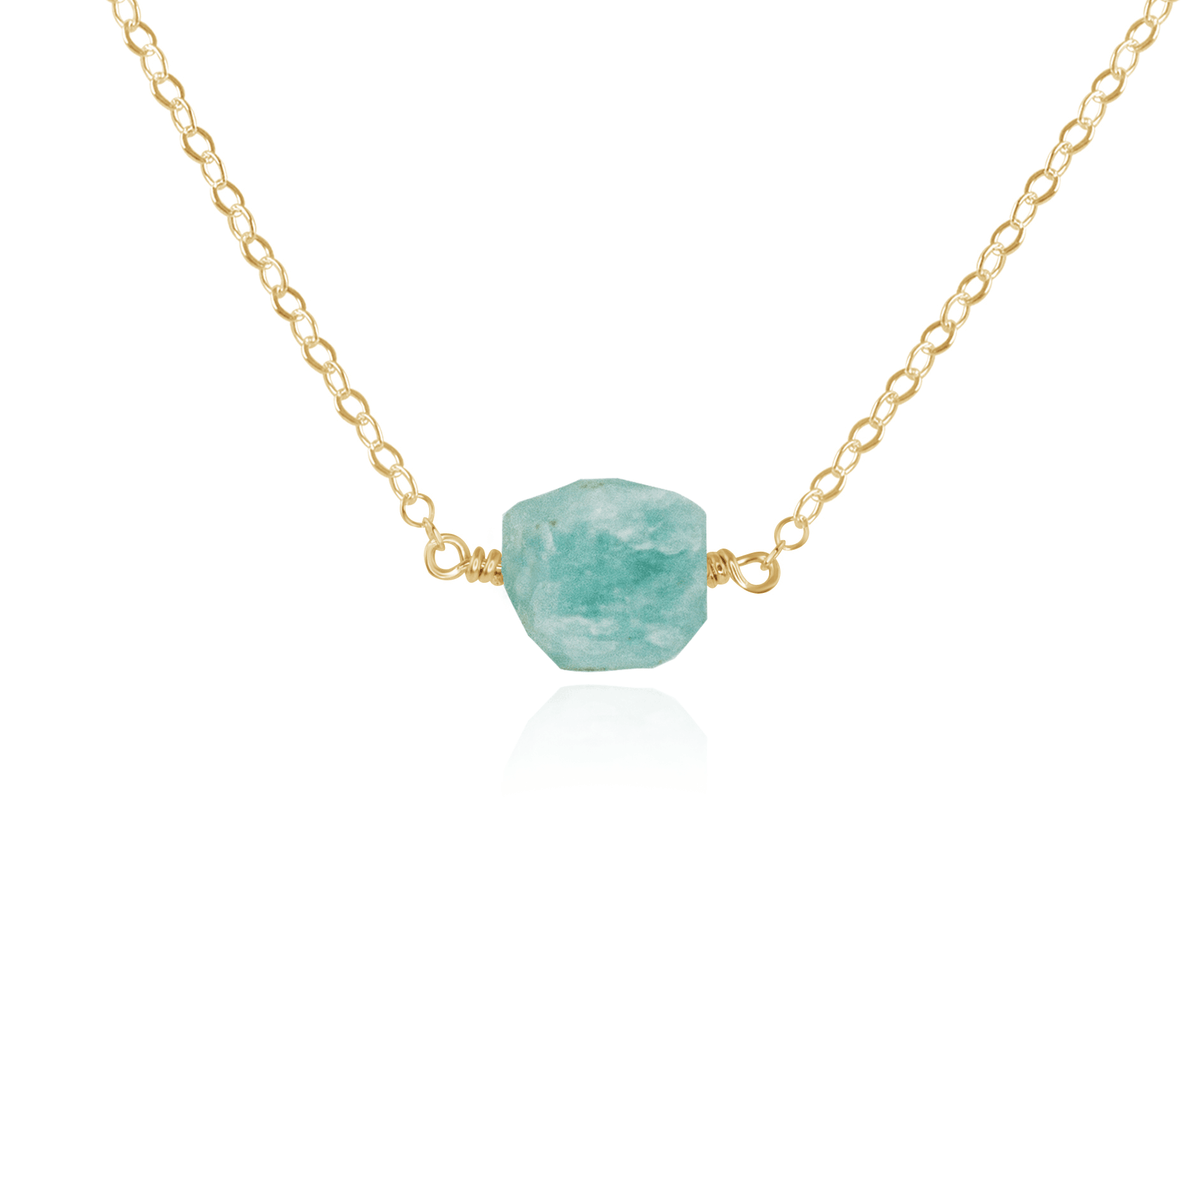 Tiny Raw Amazonite Crystal Nugget Necklace - Tiny Raw Amazonite Crystal Nugget Necklace - 14k Gold Fill - Luna Tide Handmade Crystal Jewellery